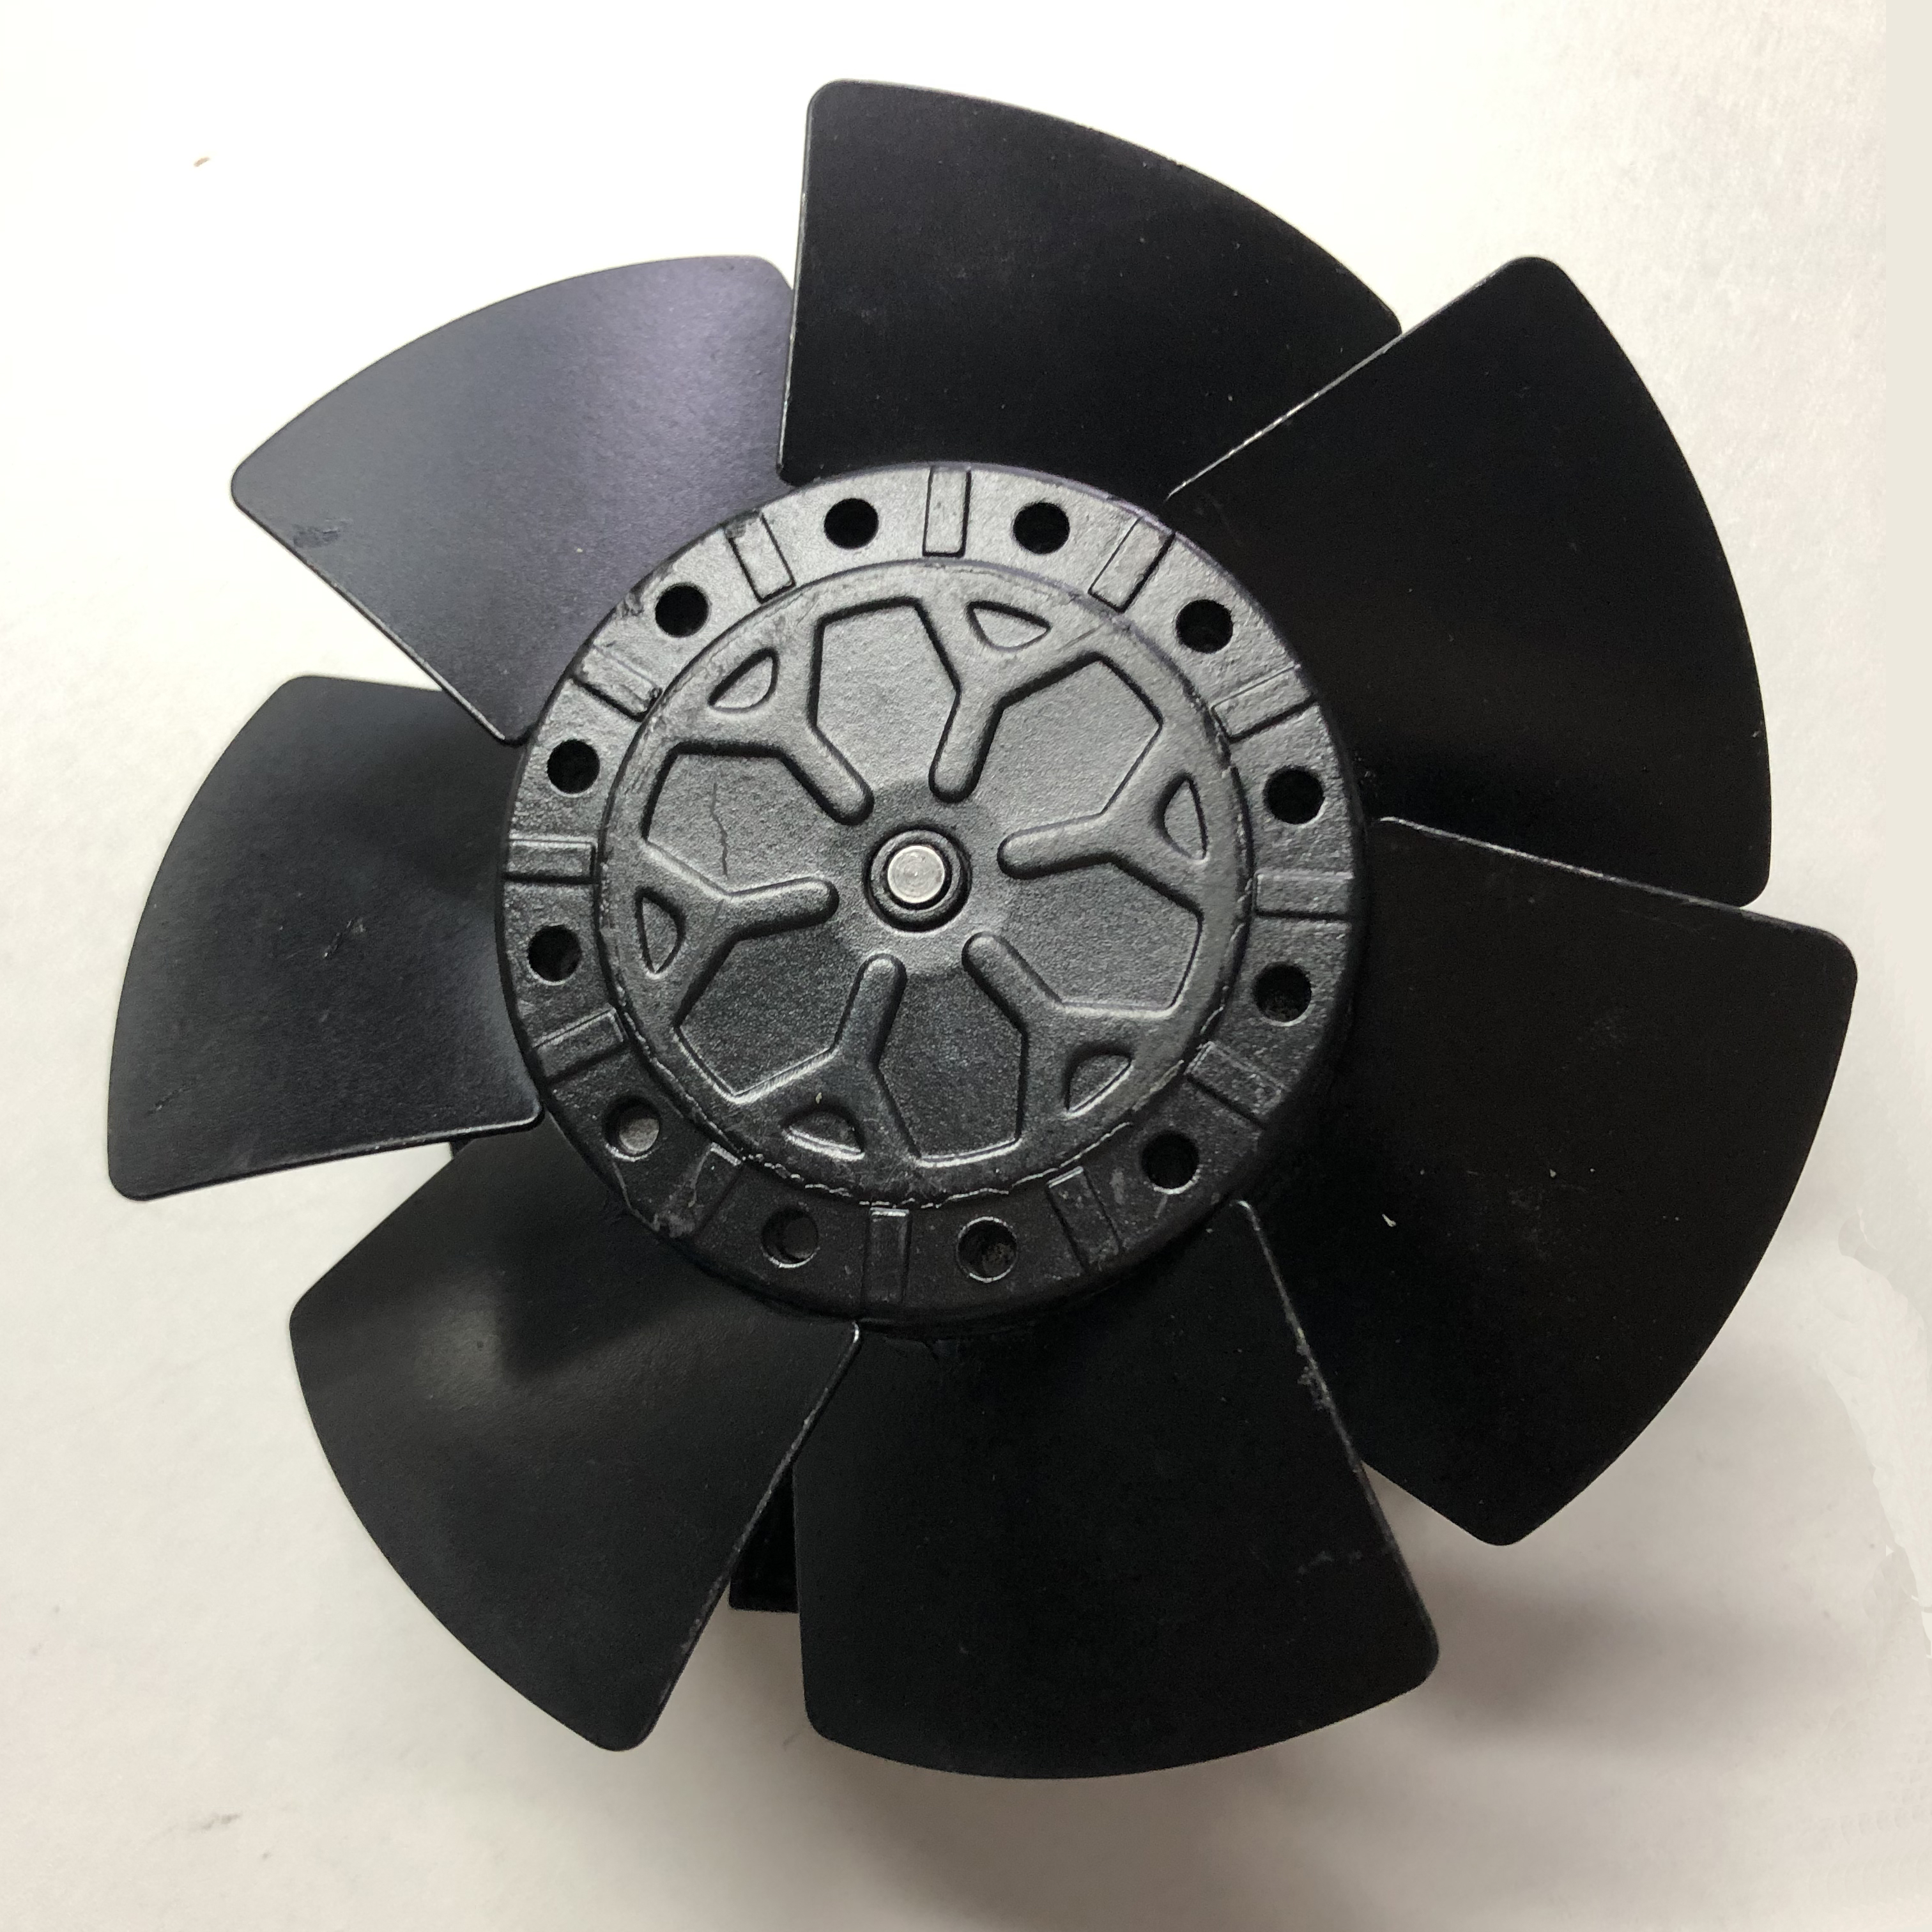 Ventilator Fan 179632404 for Muller Mueller MBJ3 loom